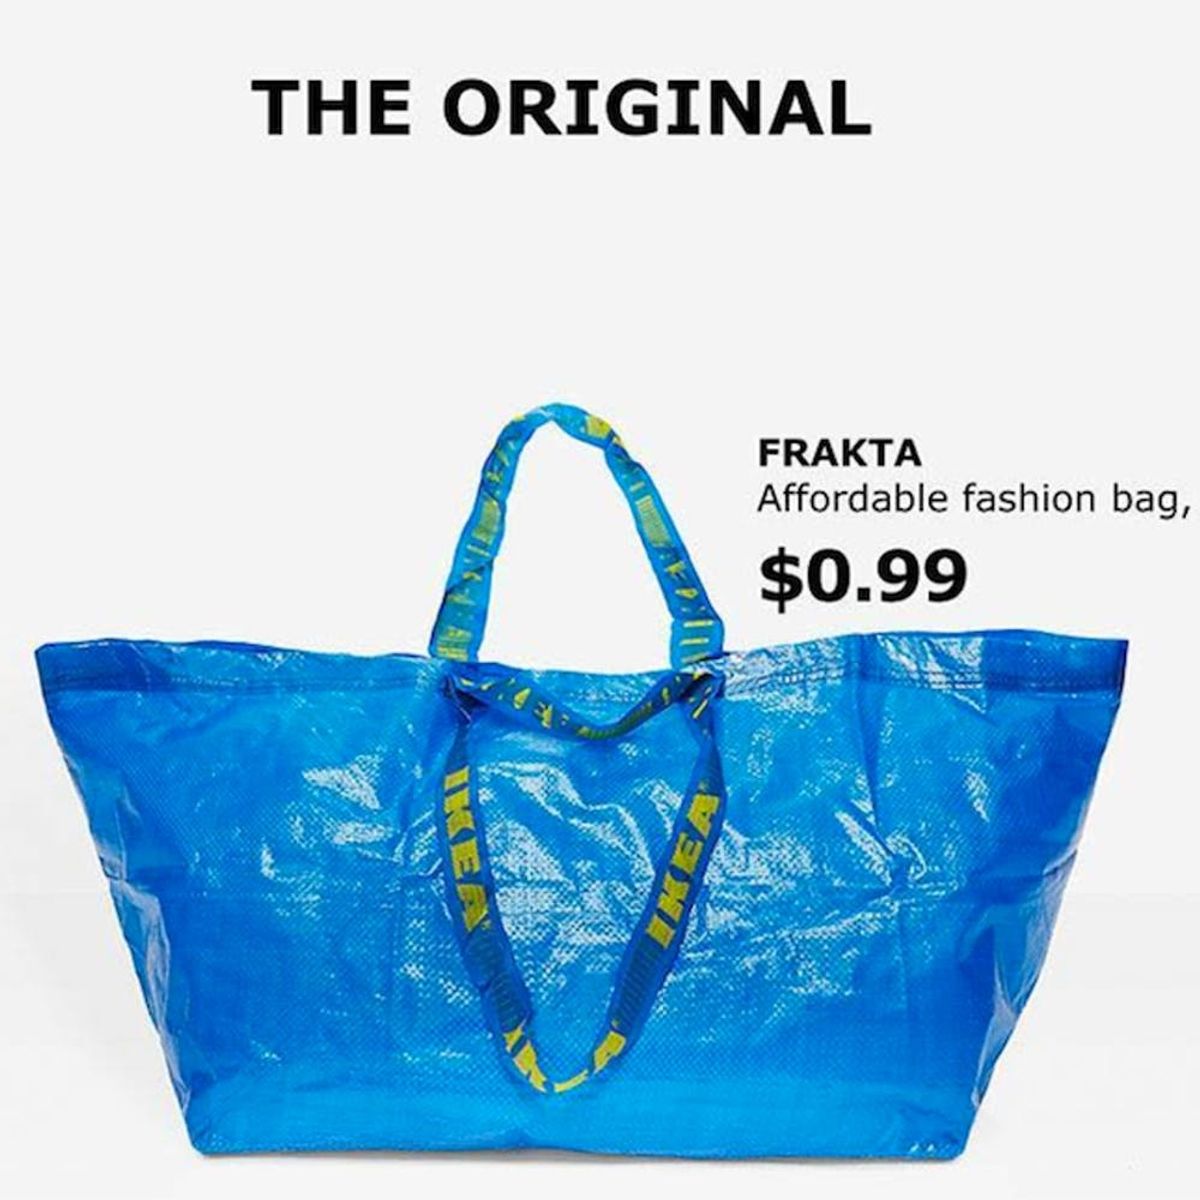 IKEA Has a Hilarious Response to Balenciaga’s “Knockoff” of  Their $0.99 Tote